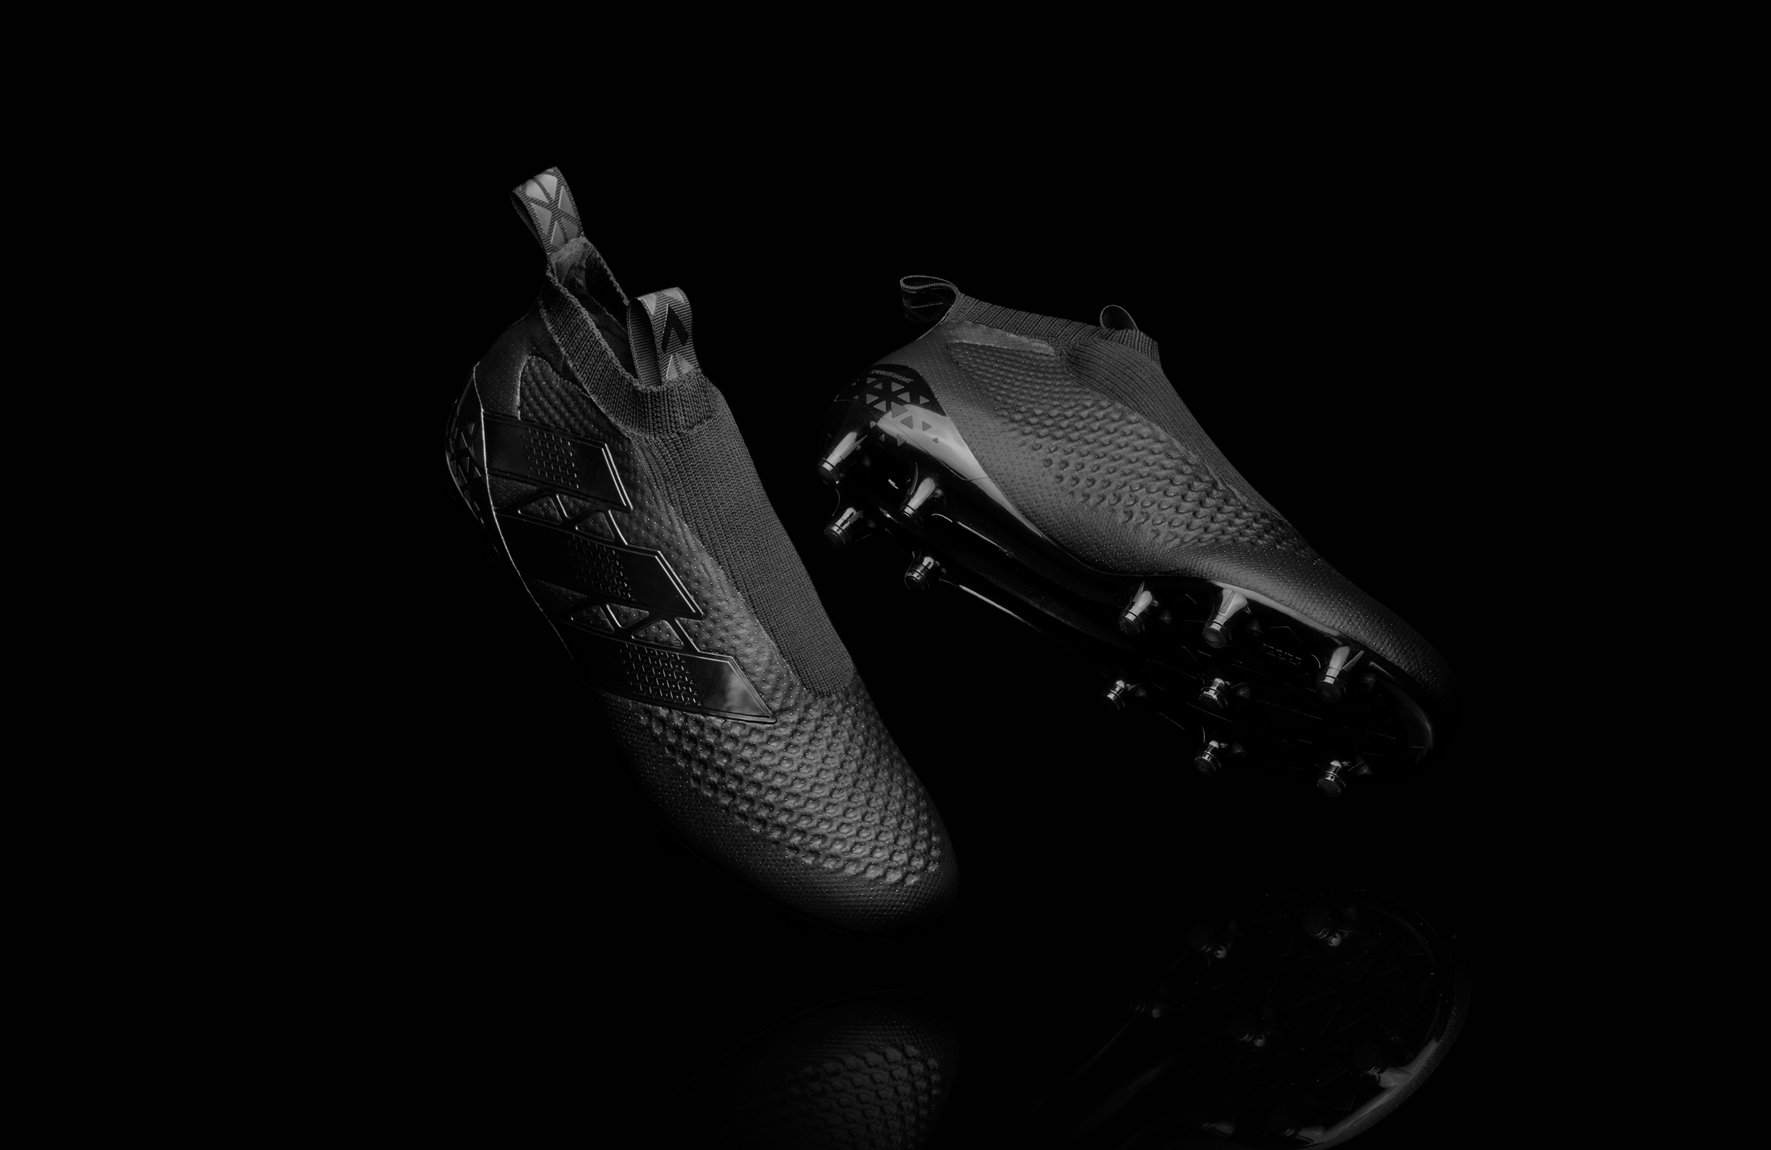 adidas football shoes no laces